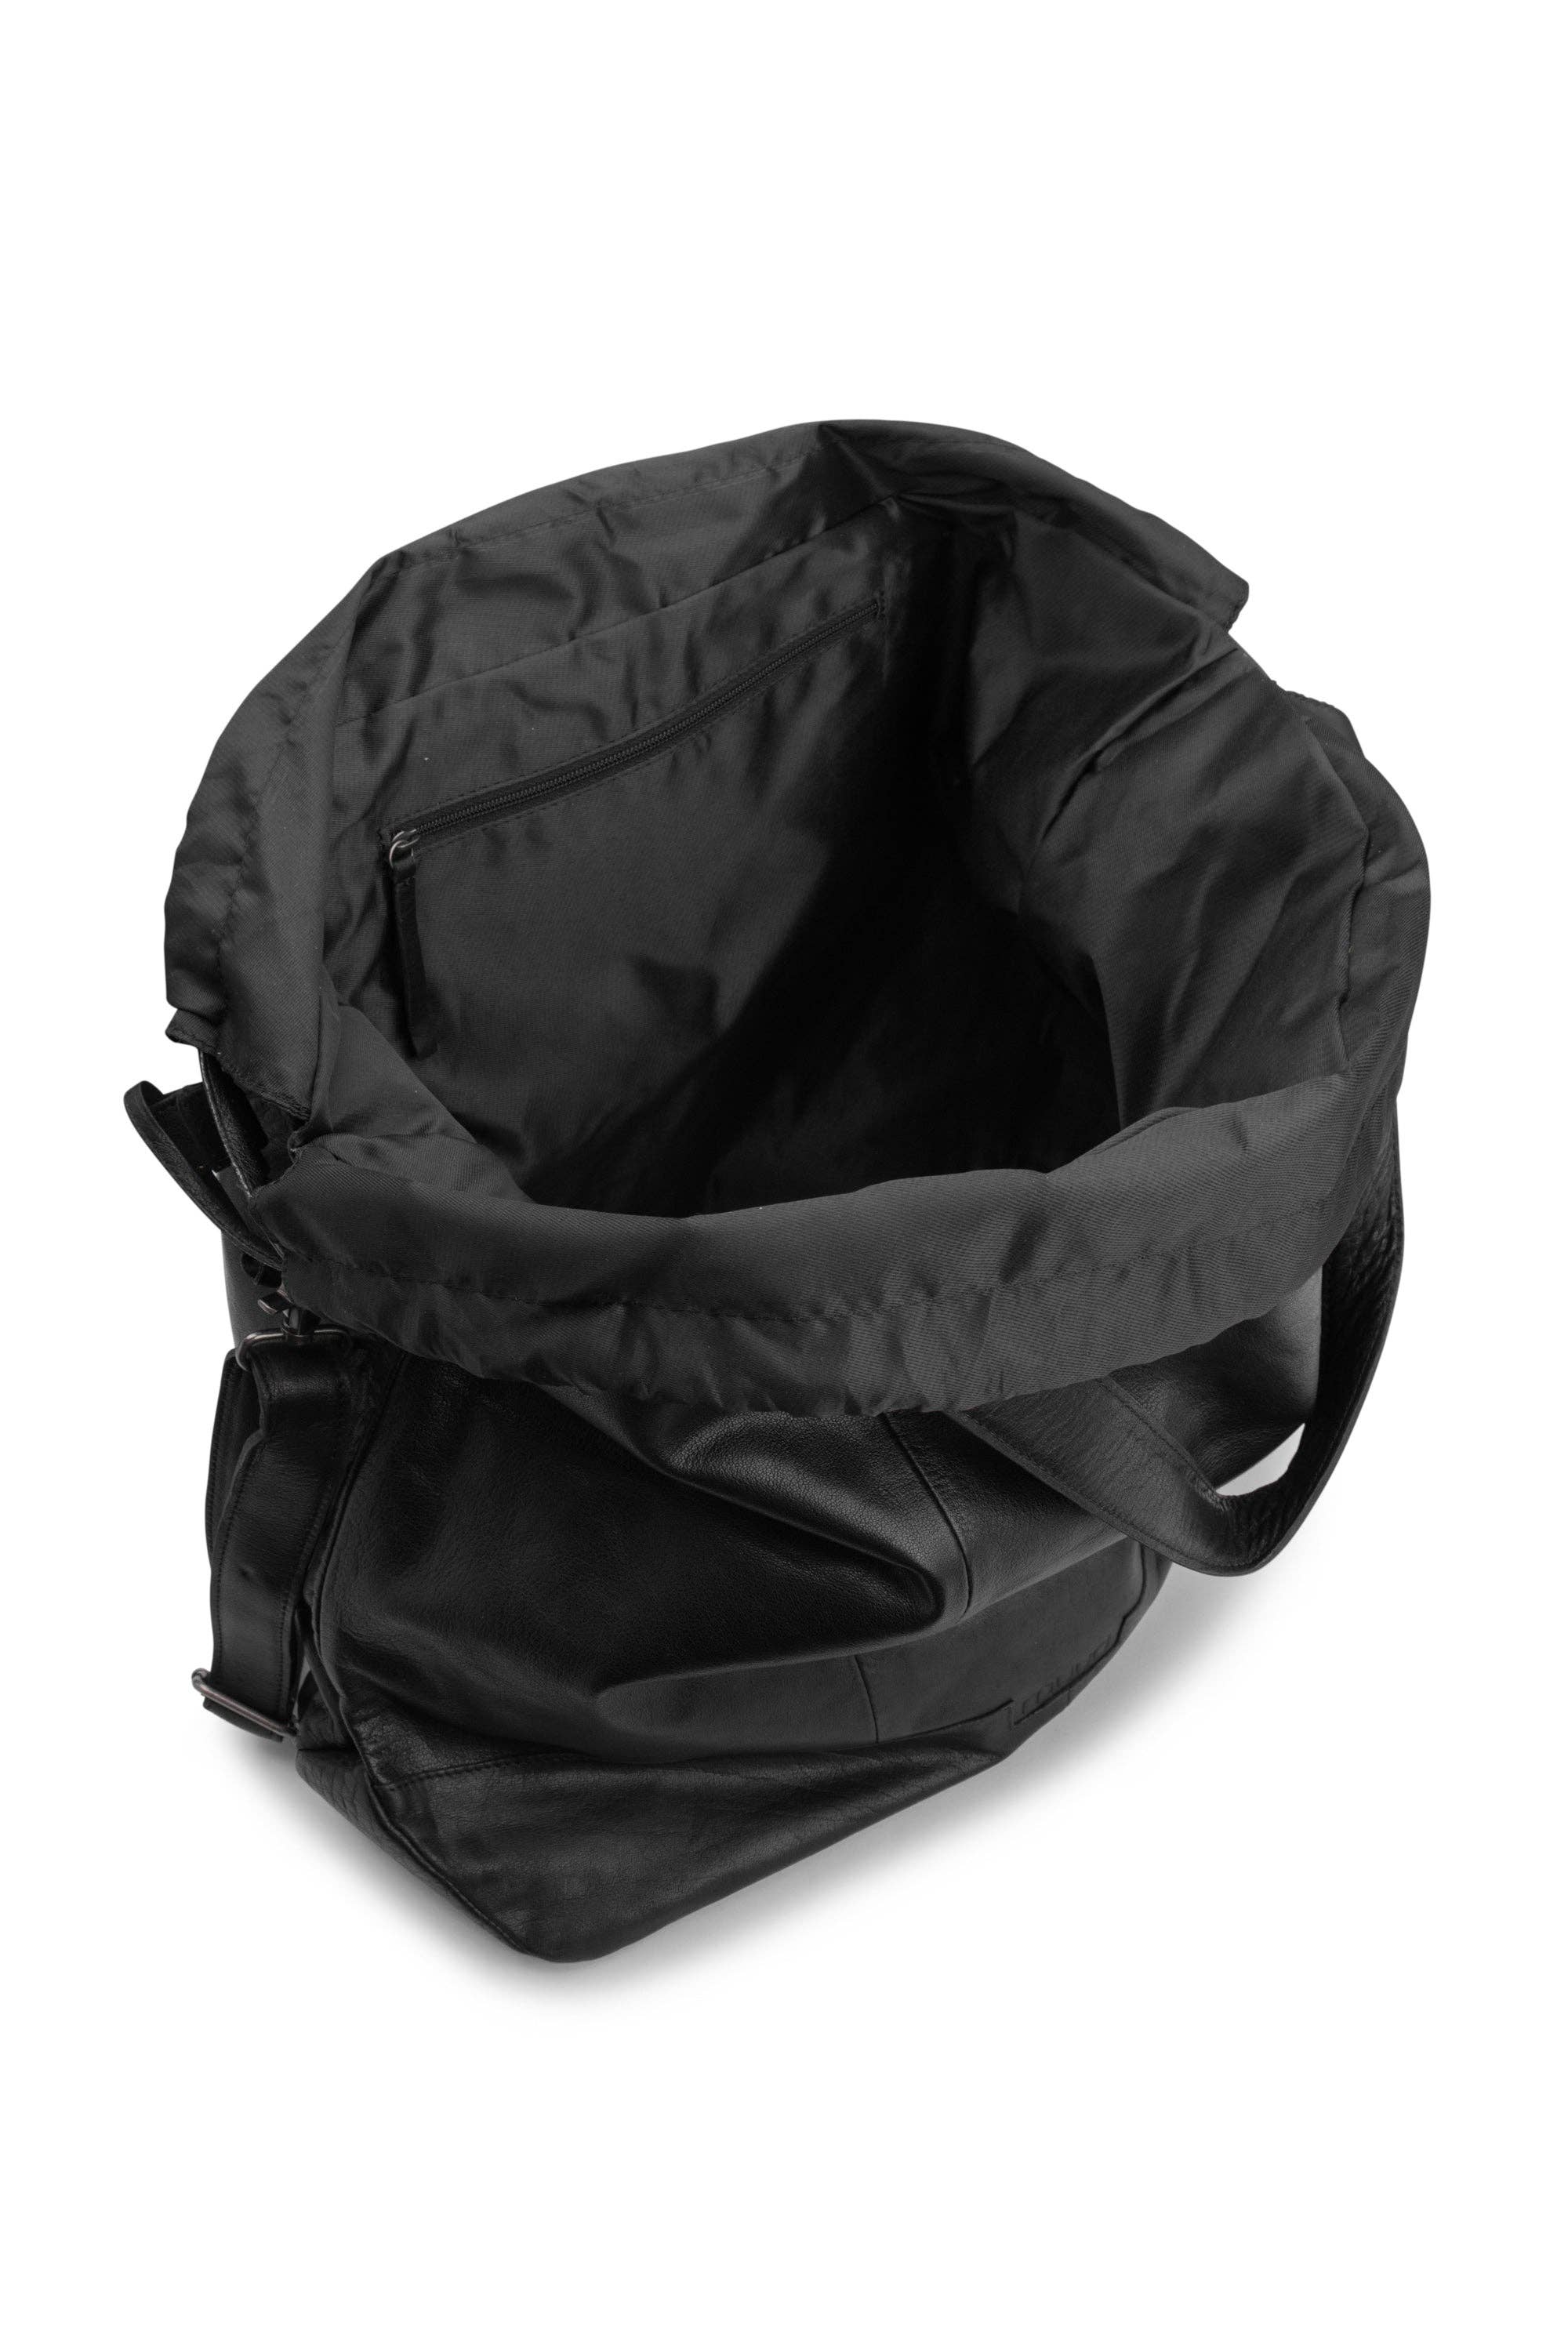 muud Lofoten XL - Extra Large Project Bag